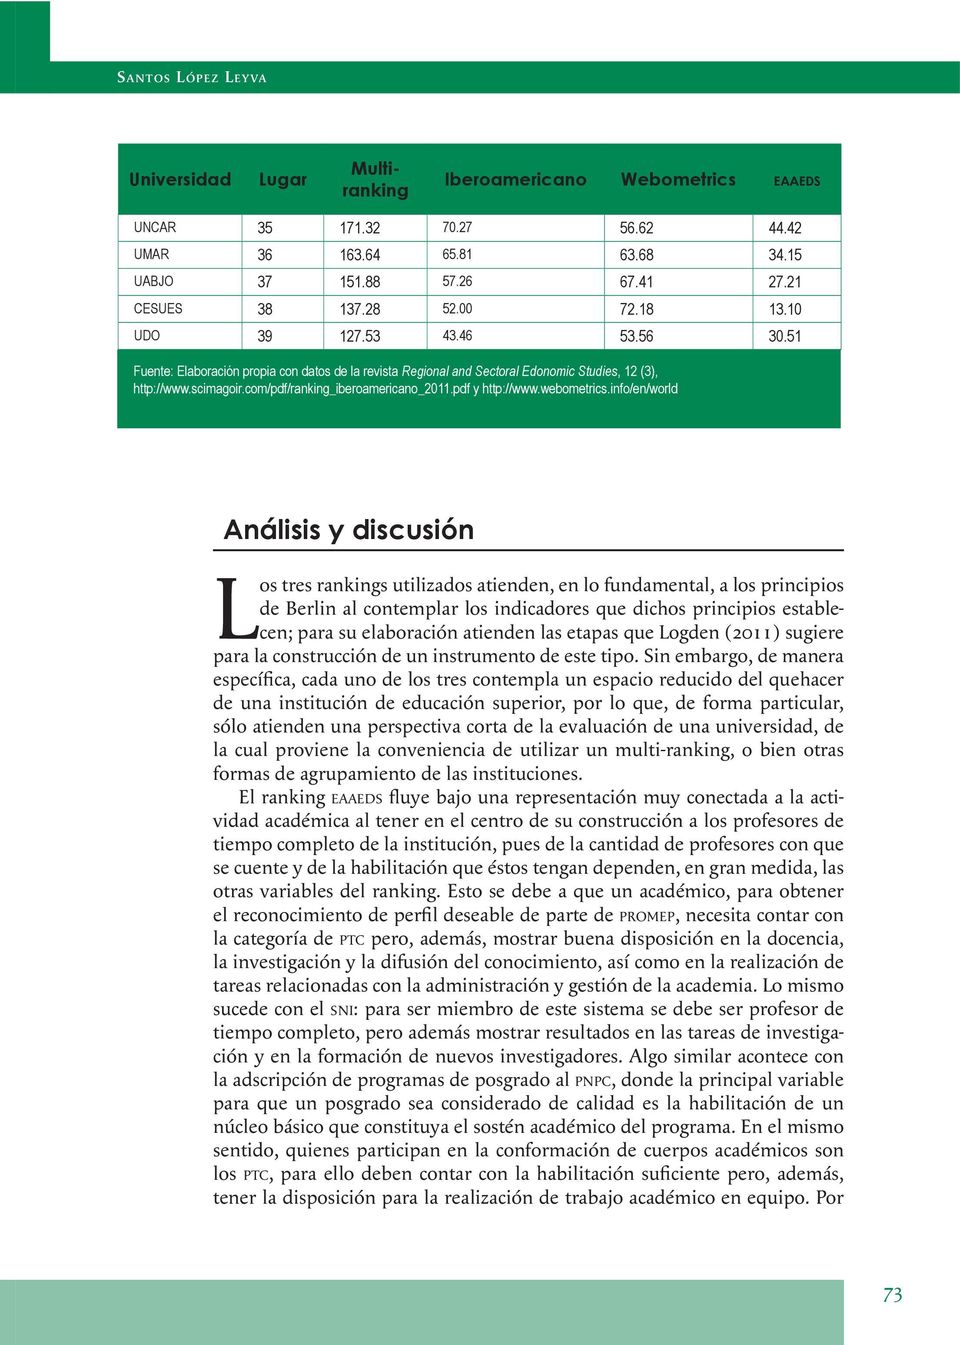 com/pdf/ranking_iberoamericano_2011.pdf y http://www.webometrics.